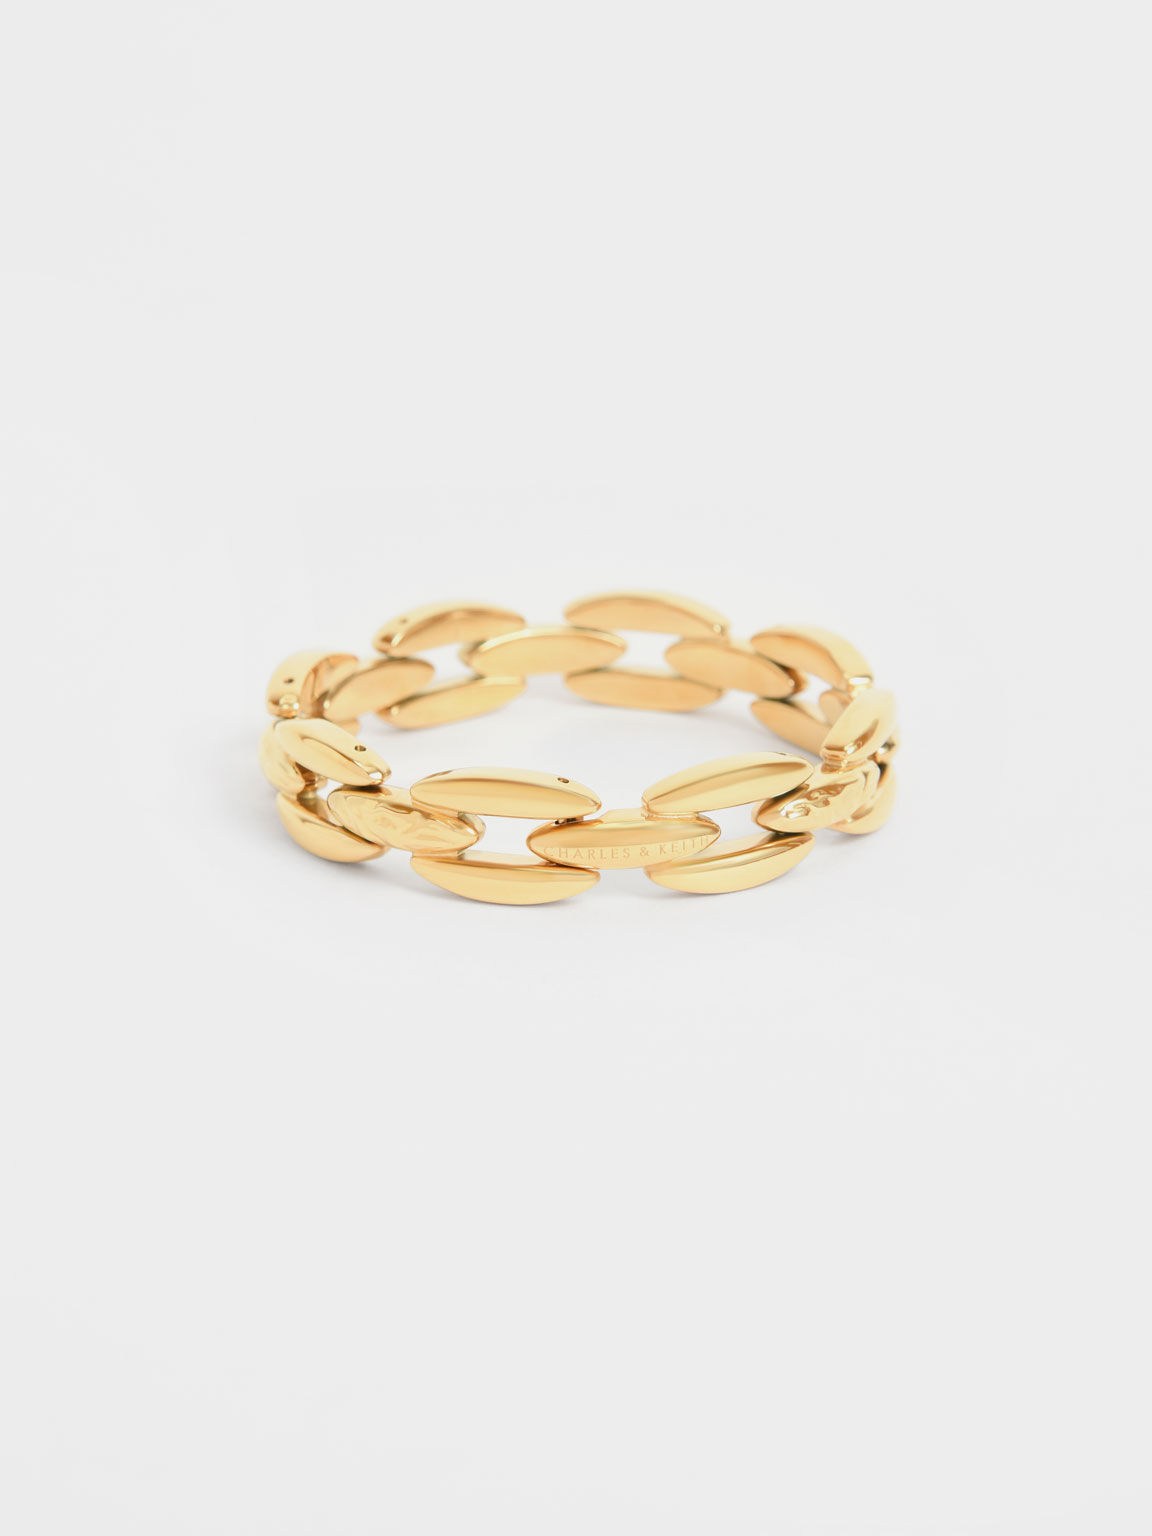 Chain-Link Cuff Bracelet, Gold, hi-res